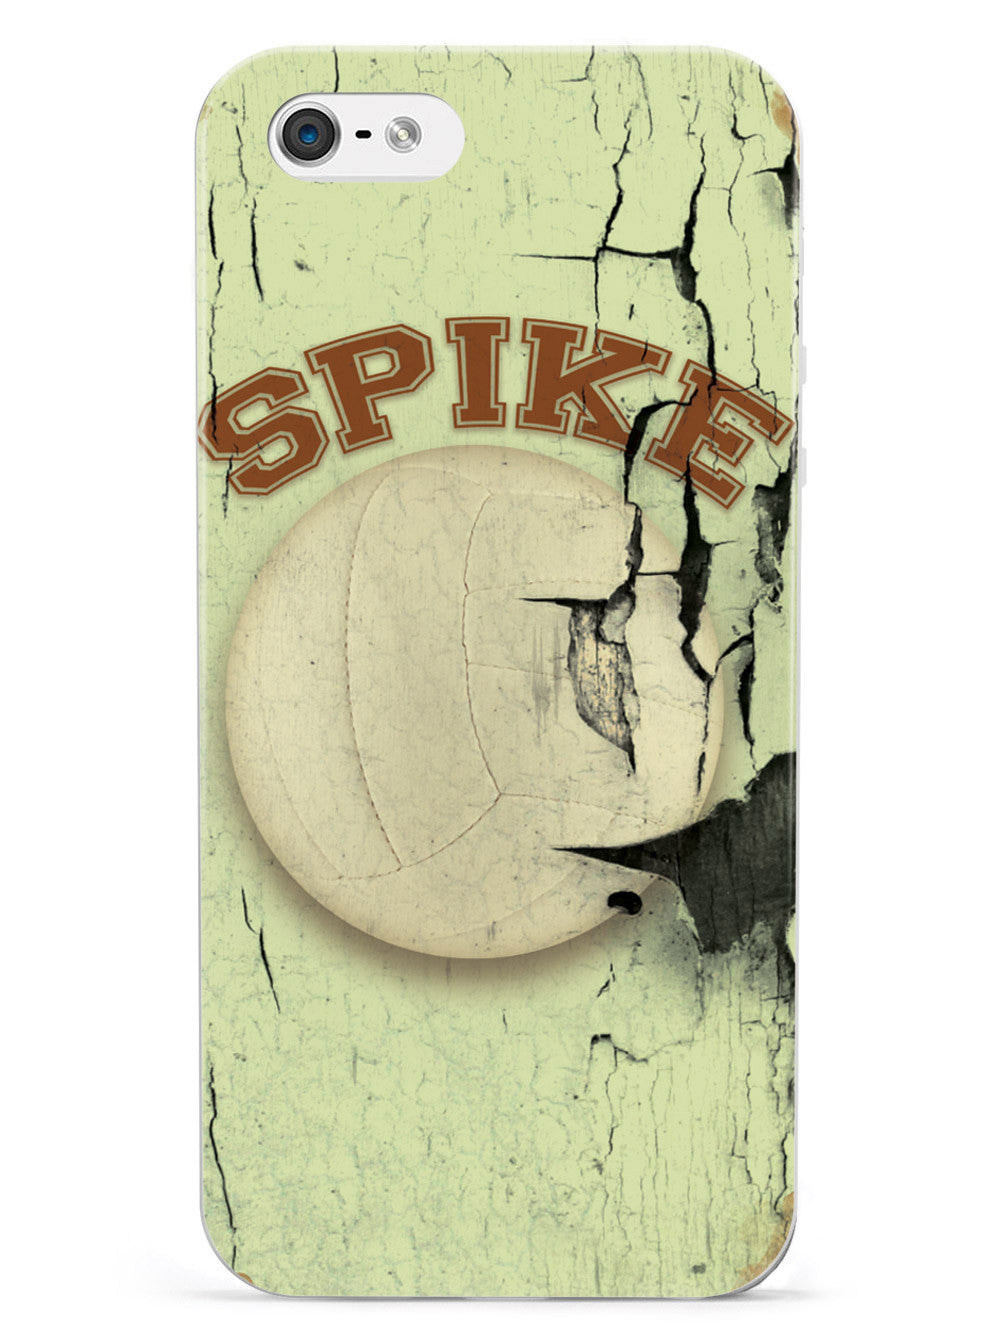 Spike! - Volleyball Case